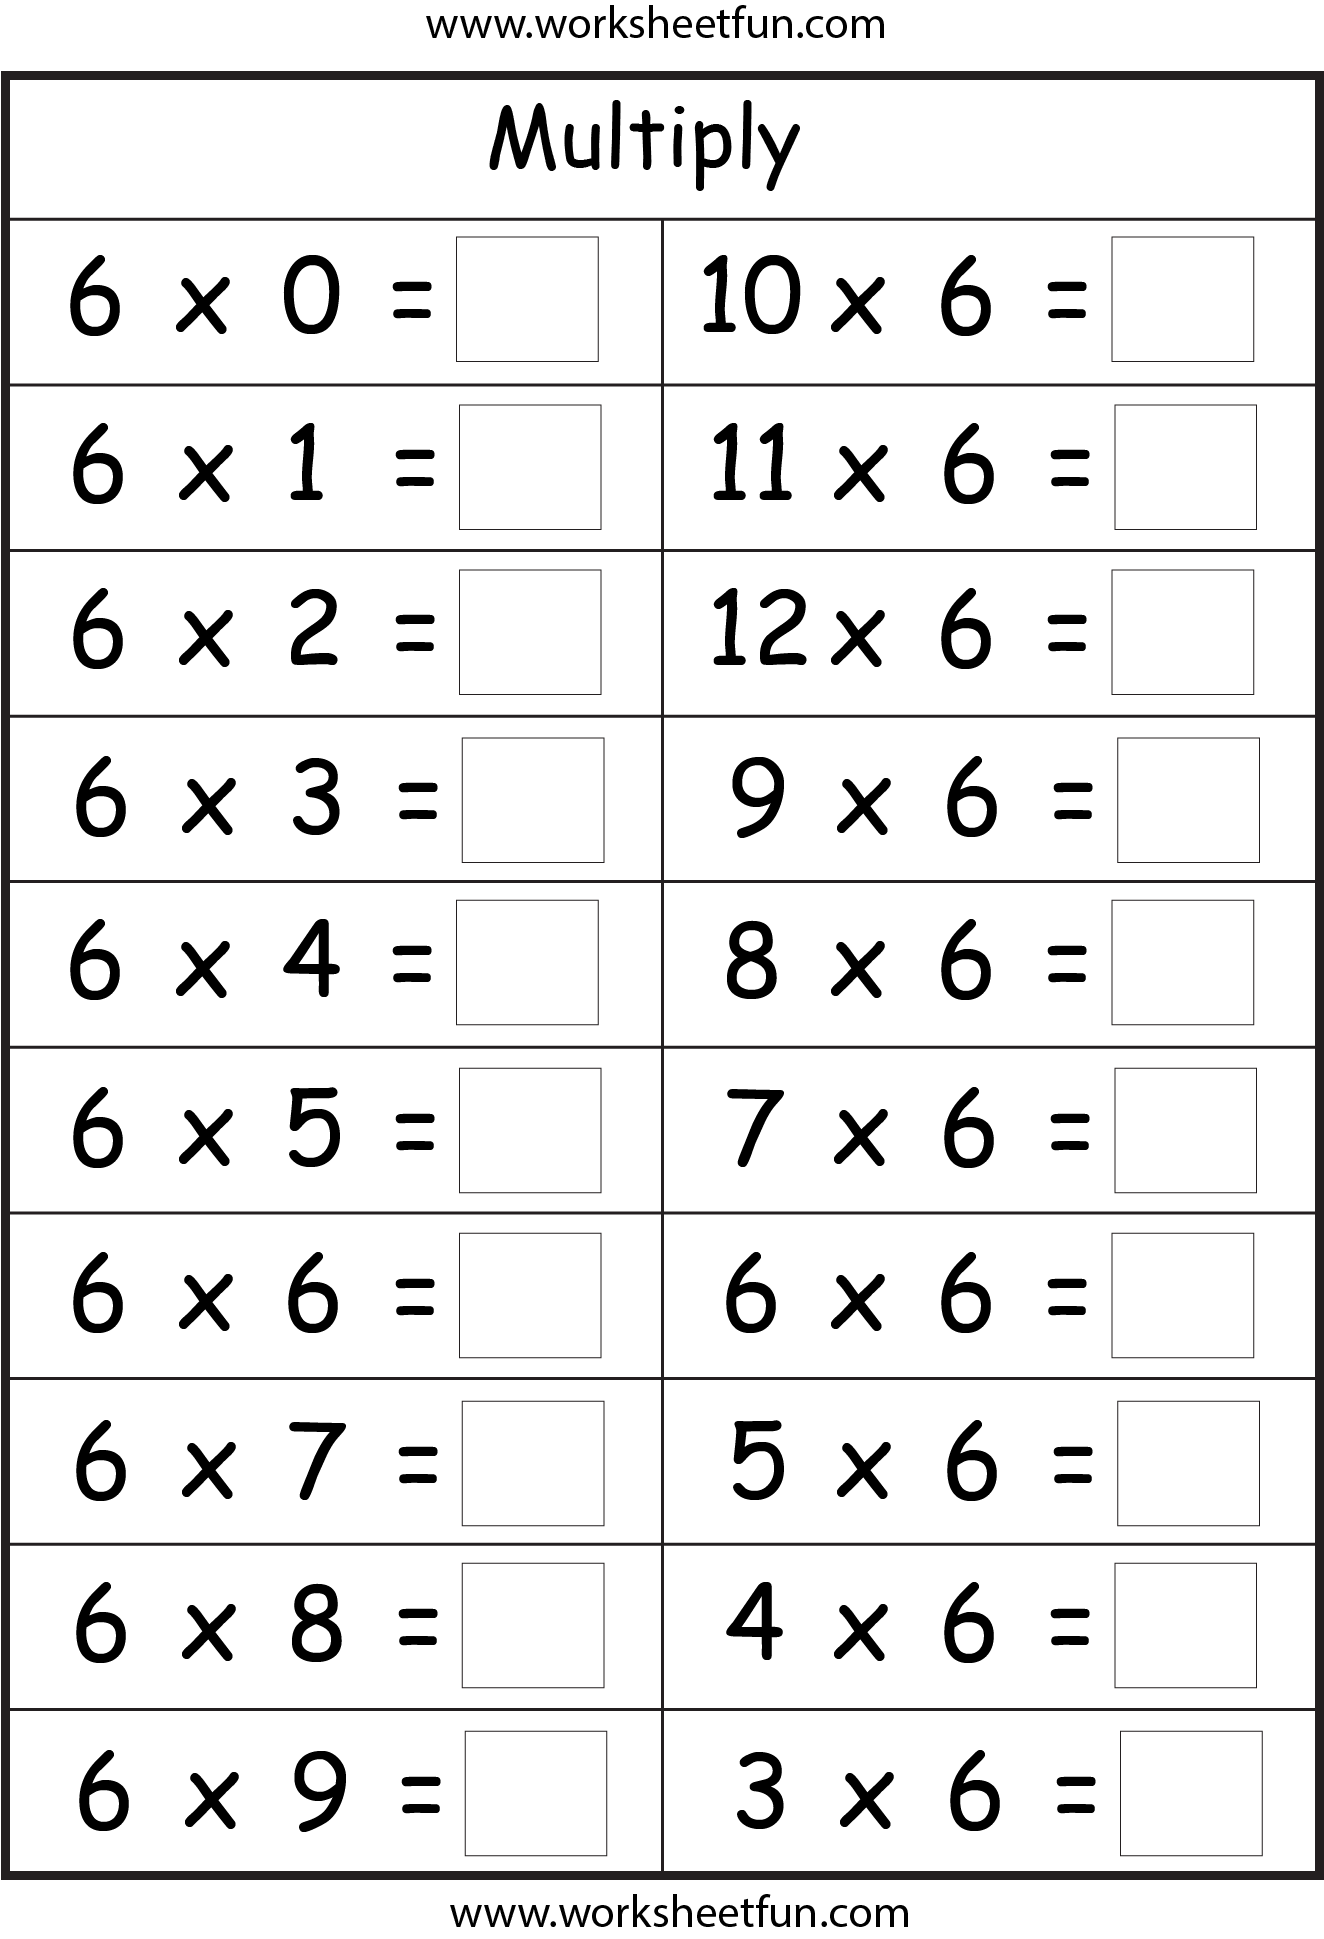 multiplication-chart-printable-super-teacher-printablemultiplicationcom-super-teacher